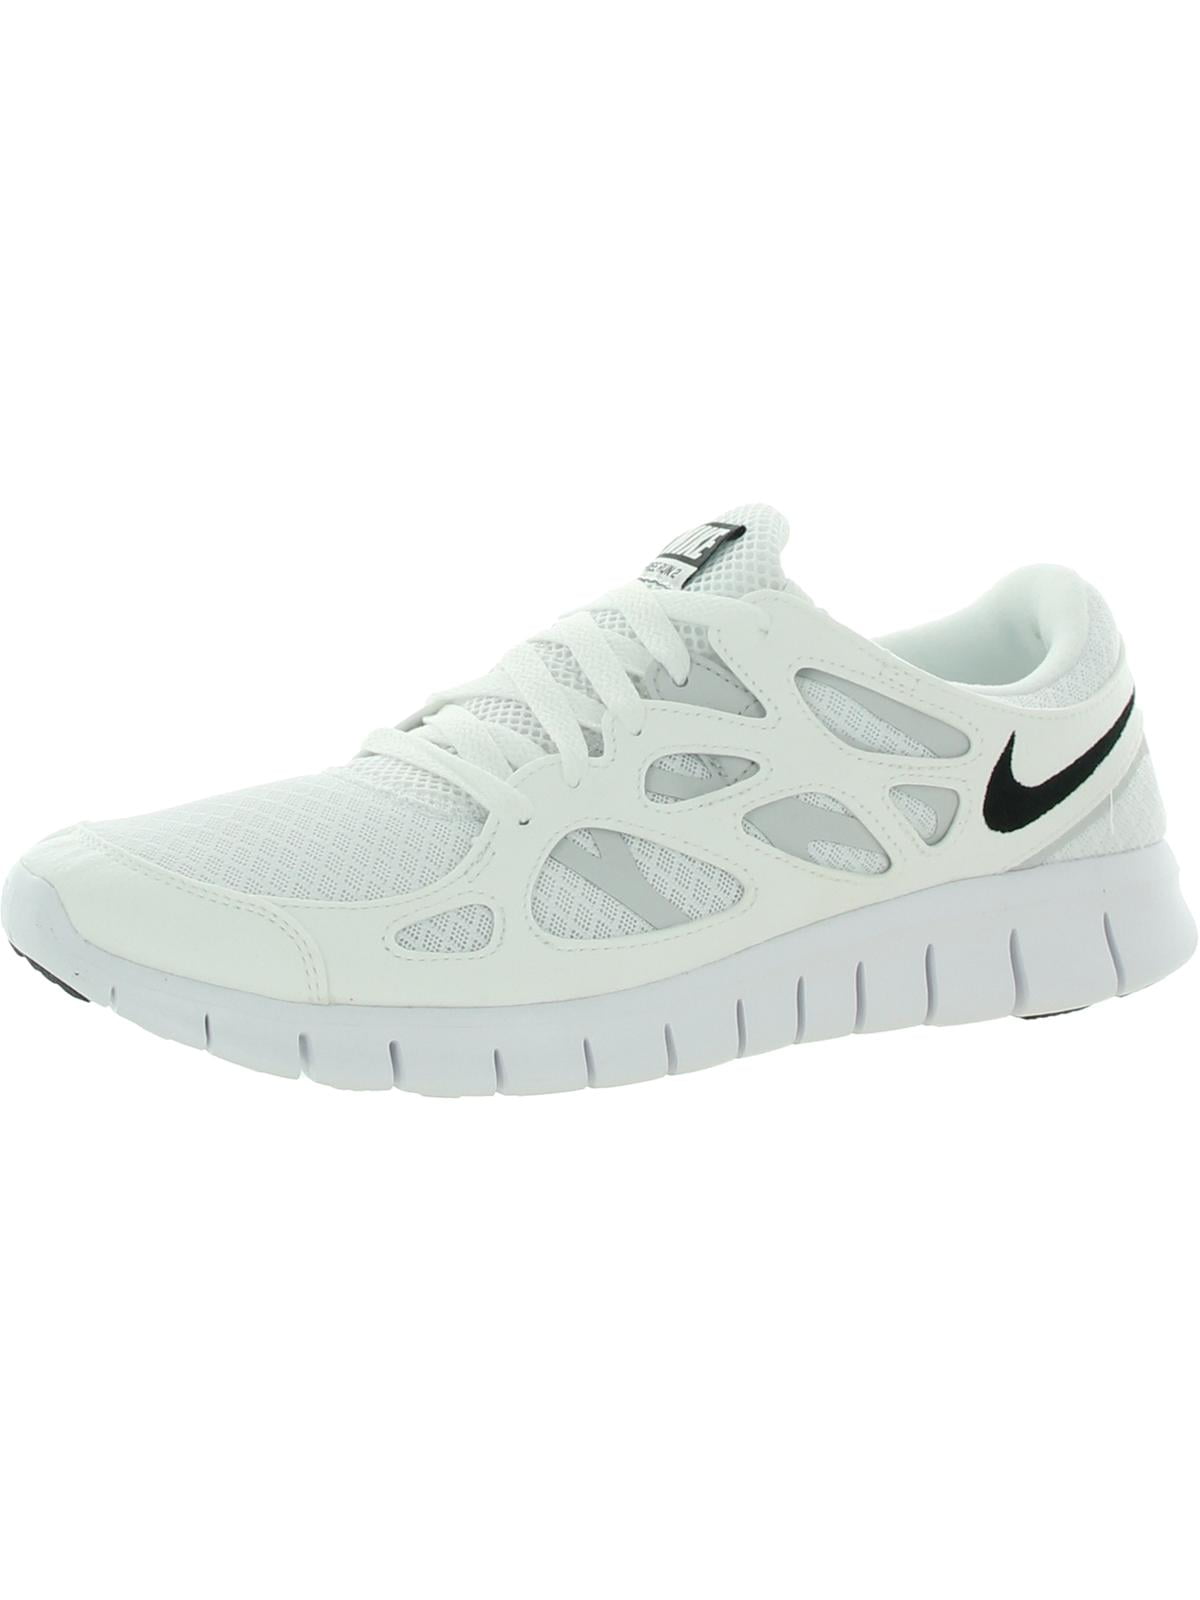 fenomeen Doordringen molen Nike Free Run 2 White/Black/Pure Platinum Men's Running Classic Shoes Size  8 - Walmart.com